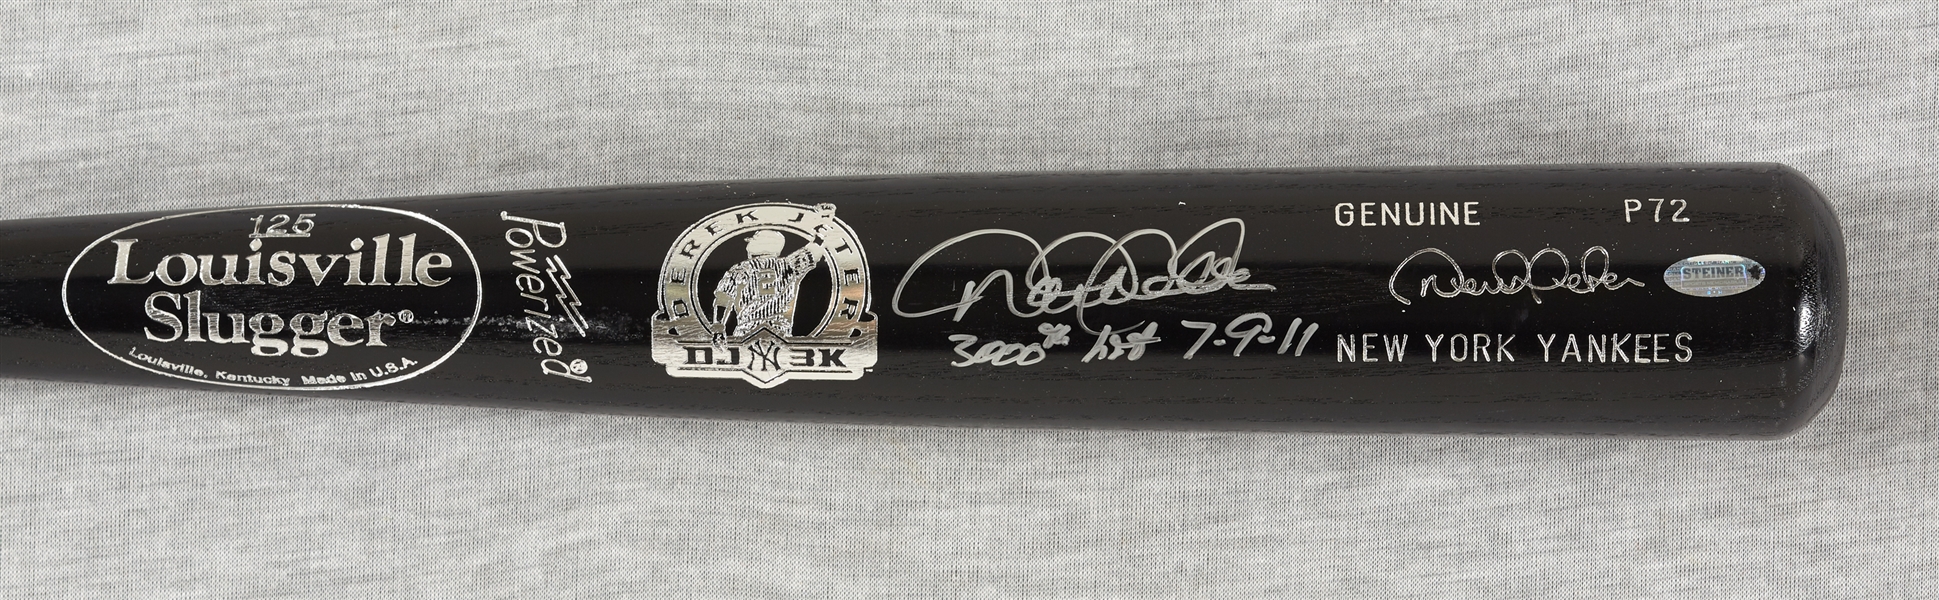 Derek Jeter Signed Louisville Slugger Commemorative Bat 3000th Hit 7-9-11 (MLB) (Steiner)